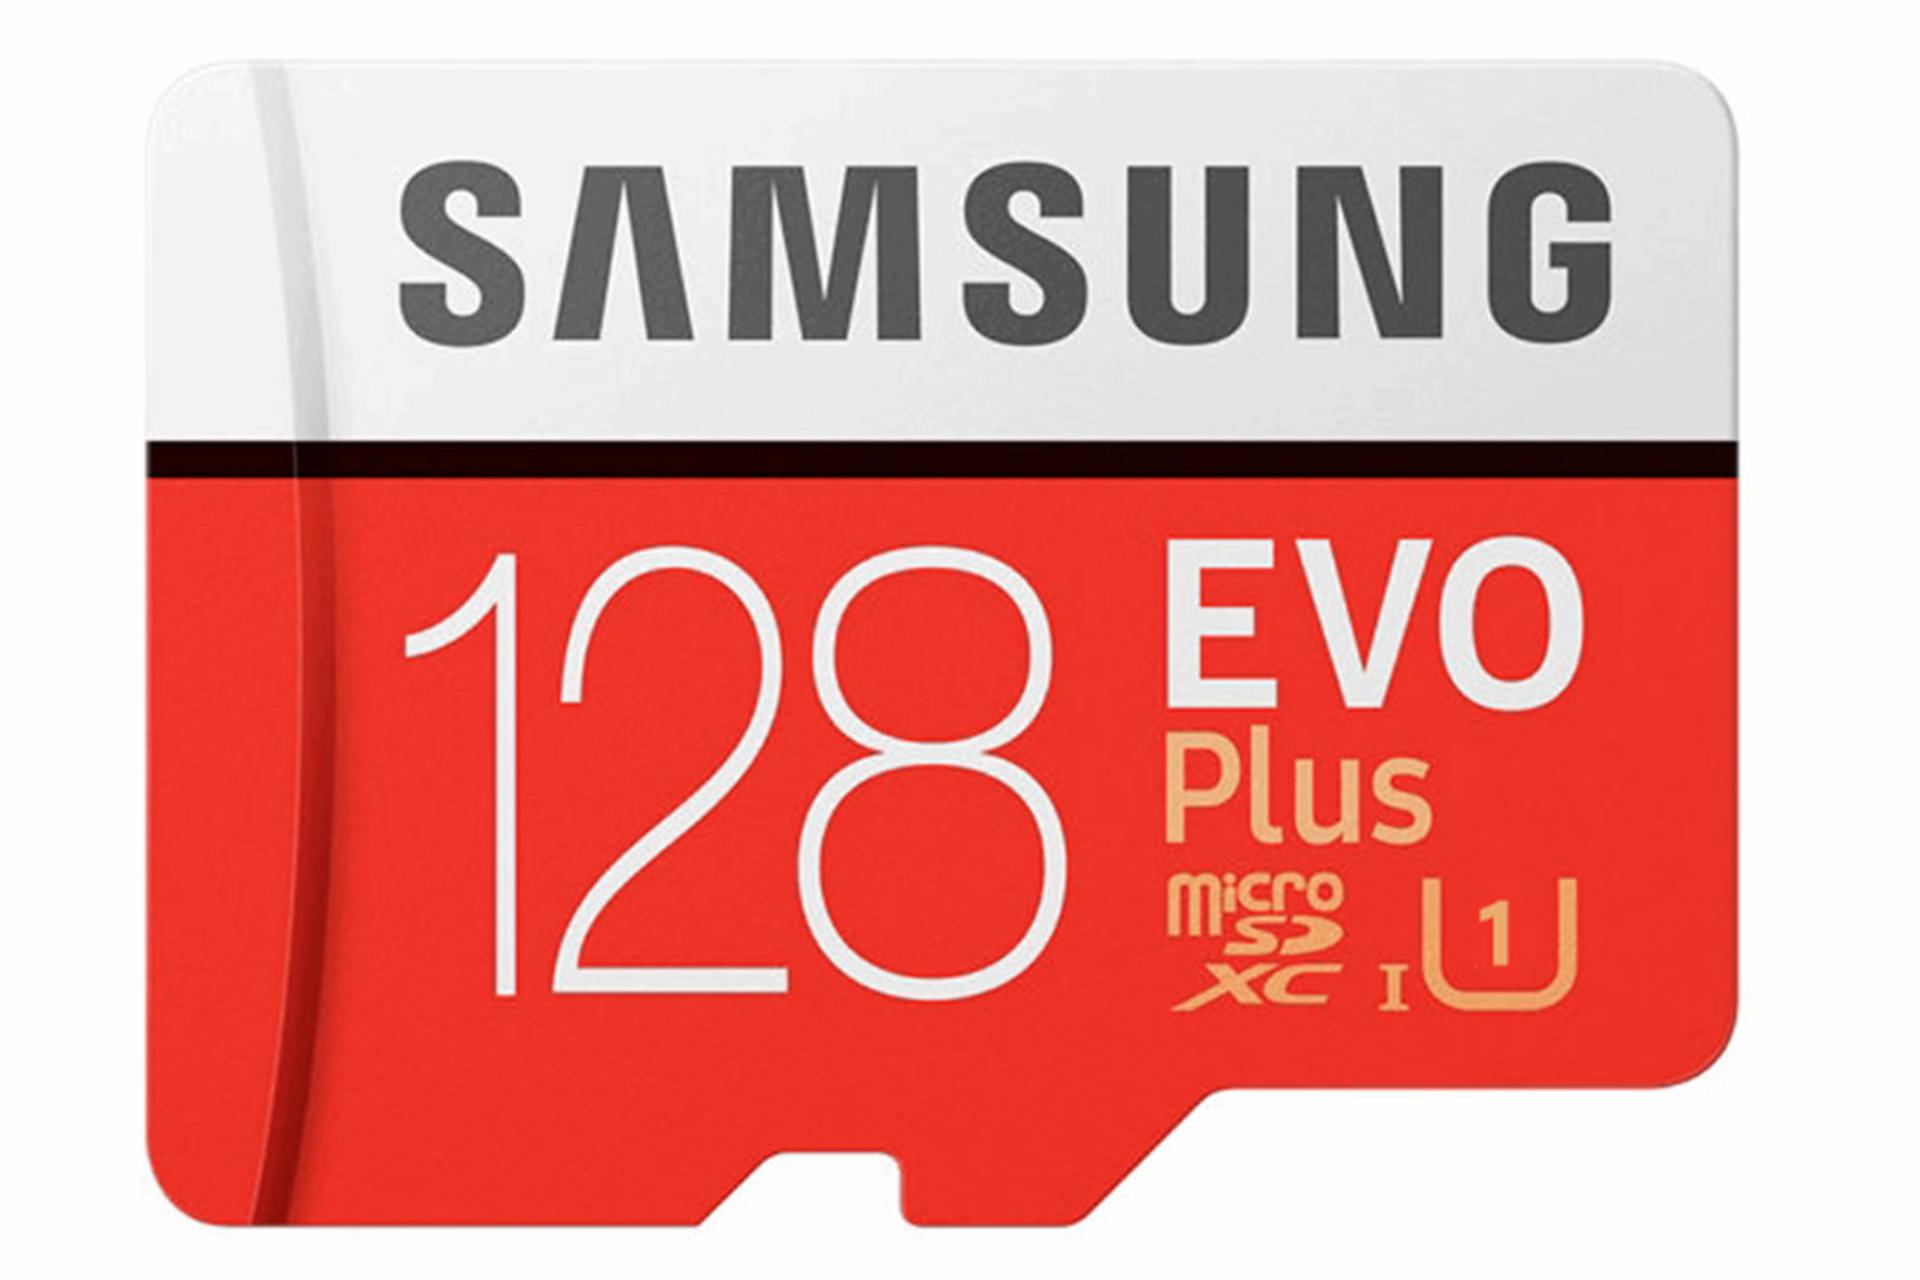 Samsung Evo Plus microSDXC Class 10 UHS-I U1 128GB